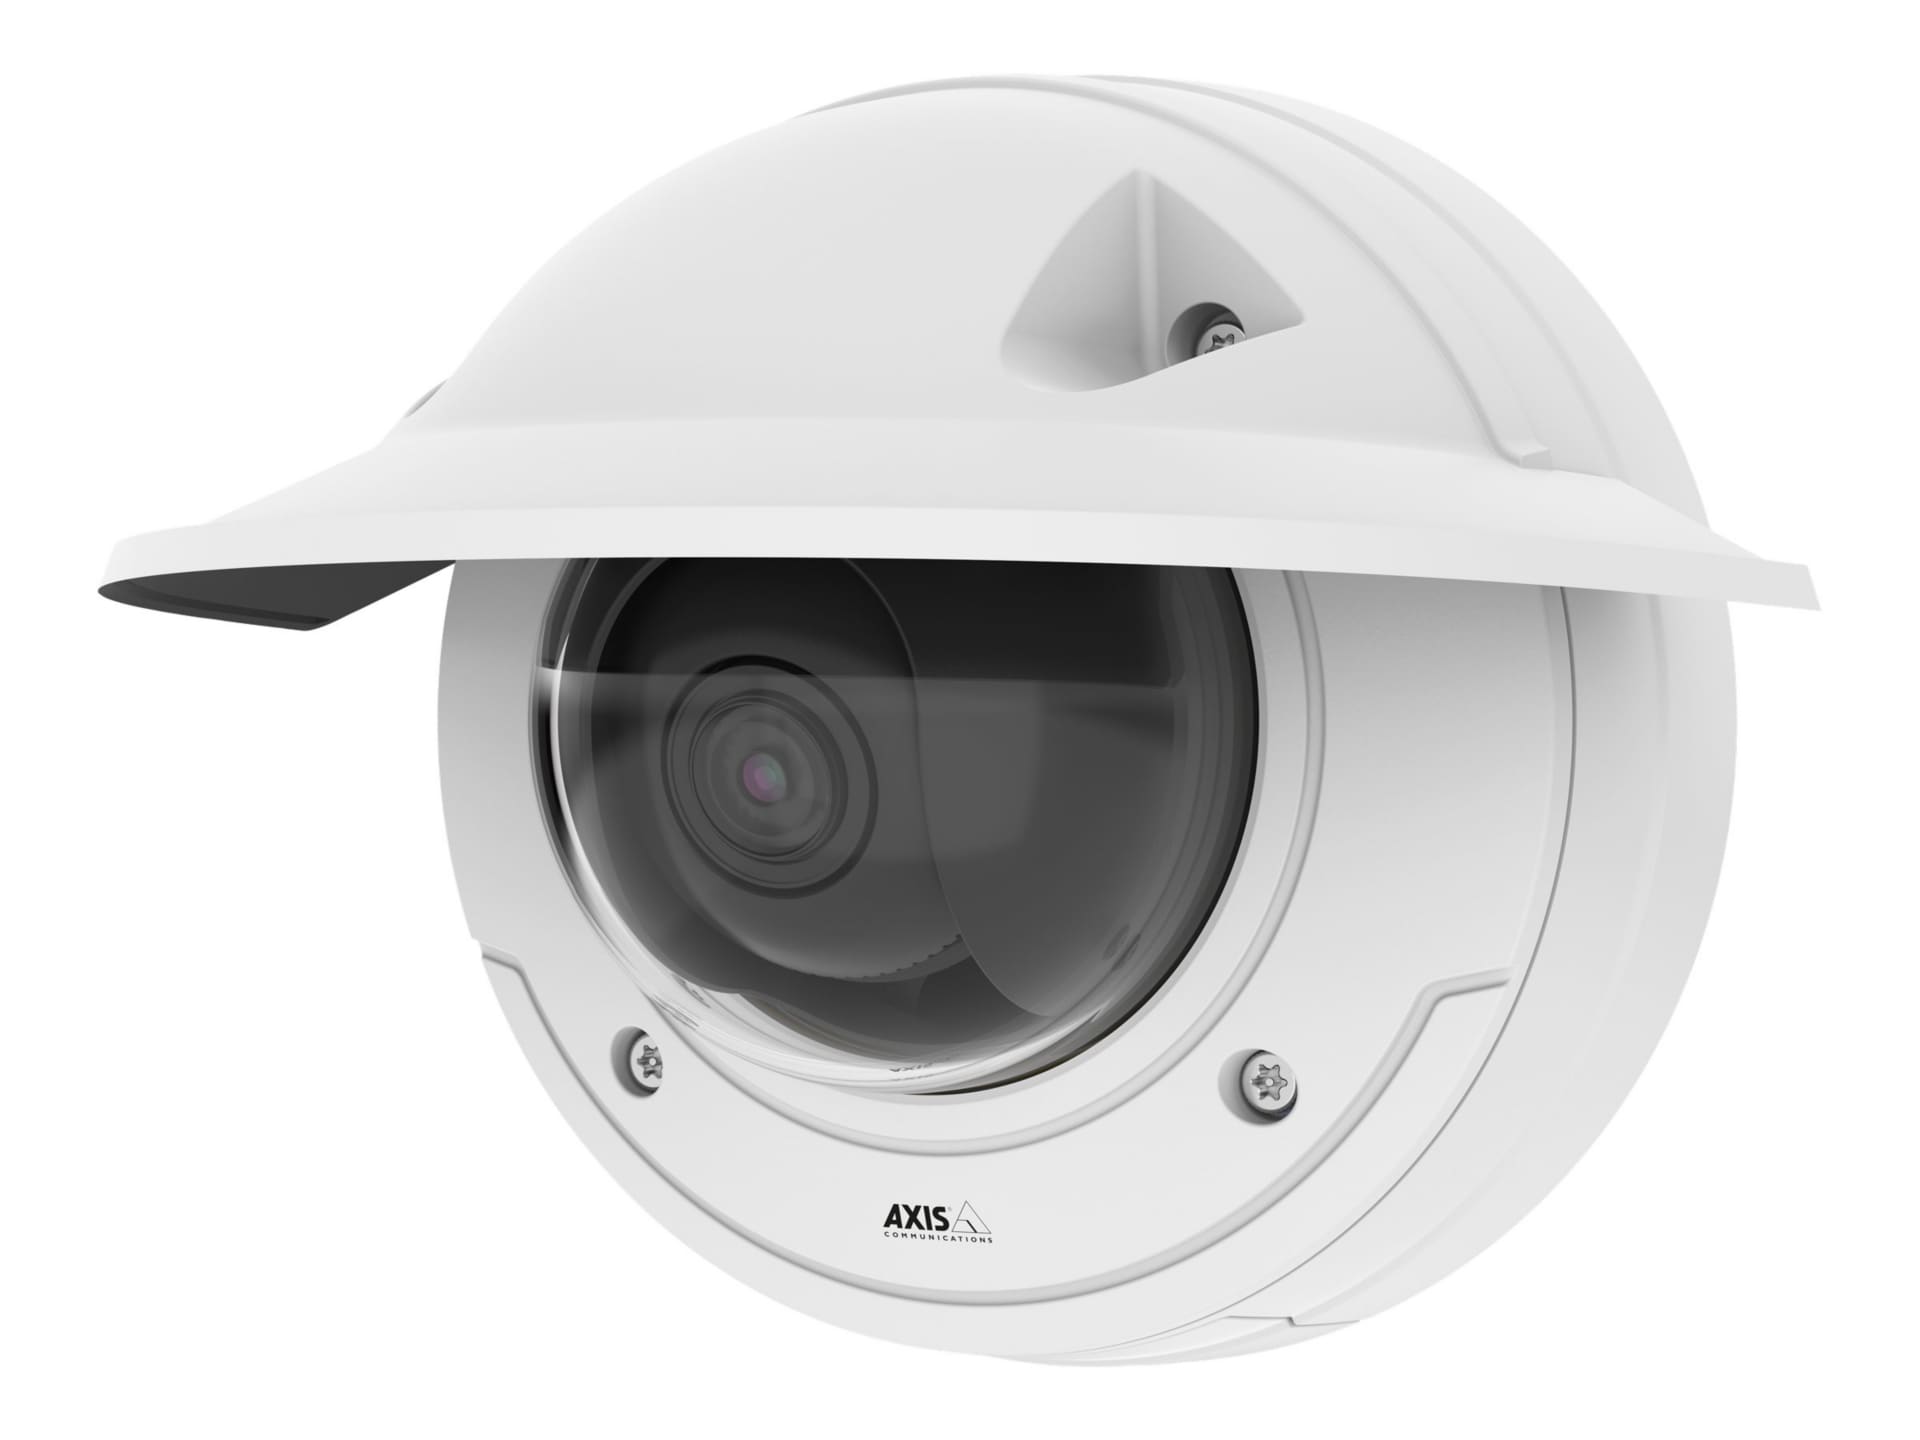 AXIS P3375-VE Network Camera - network surveillance camera - dome